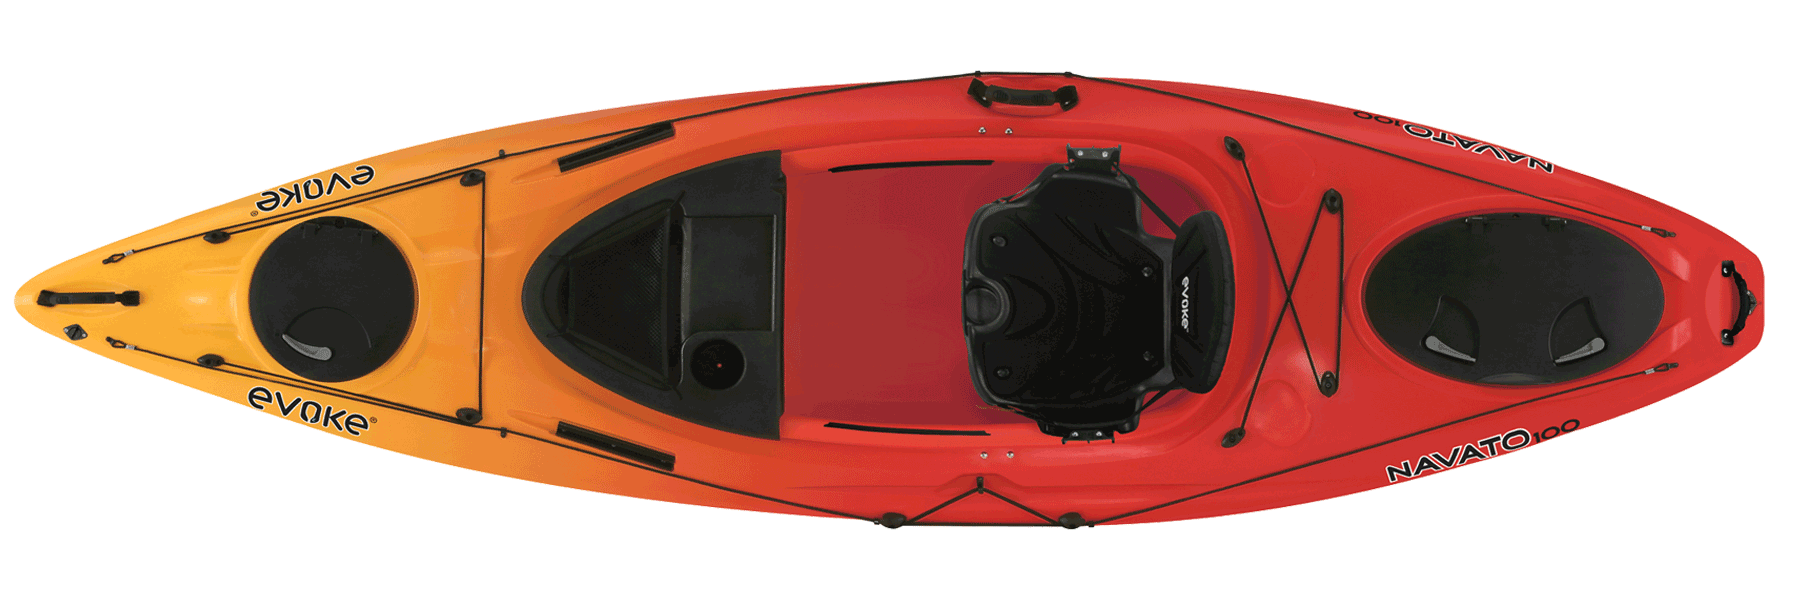 Navato 100 Sit-in recreational Kayak